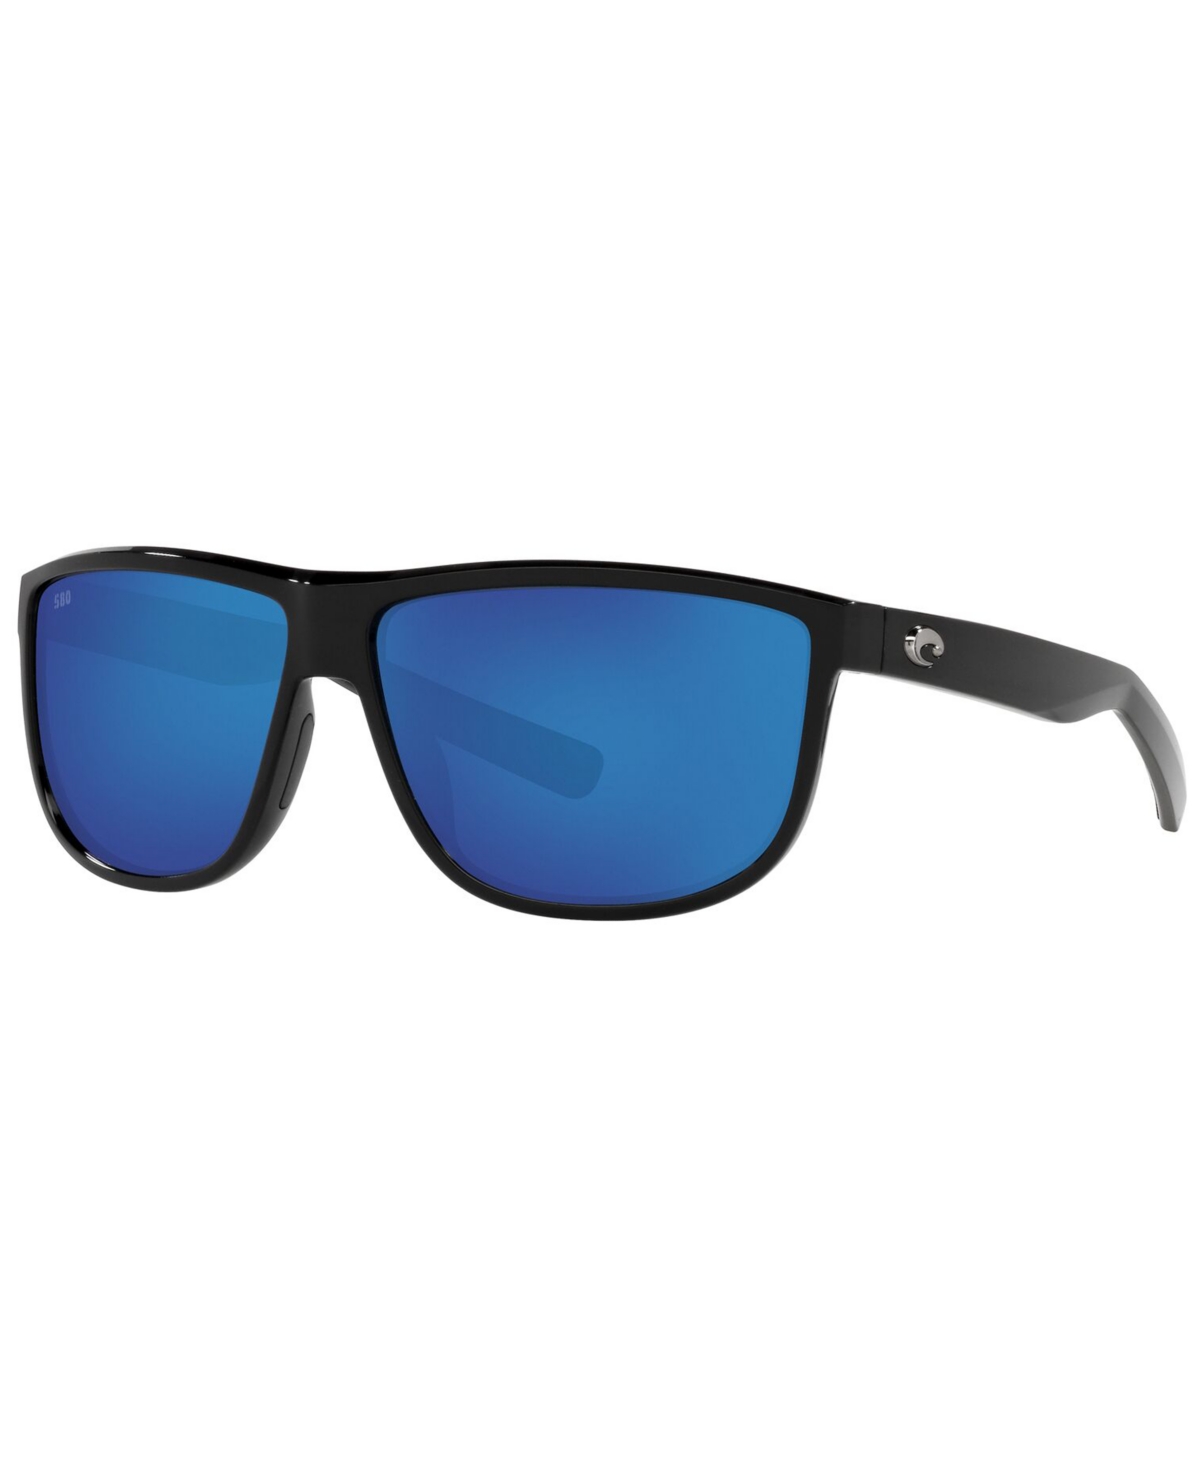 Rincondo Polarized Sunglasses, 6S9010 61 - SHINY BLACK/BLUE MIRROR G